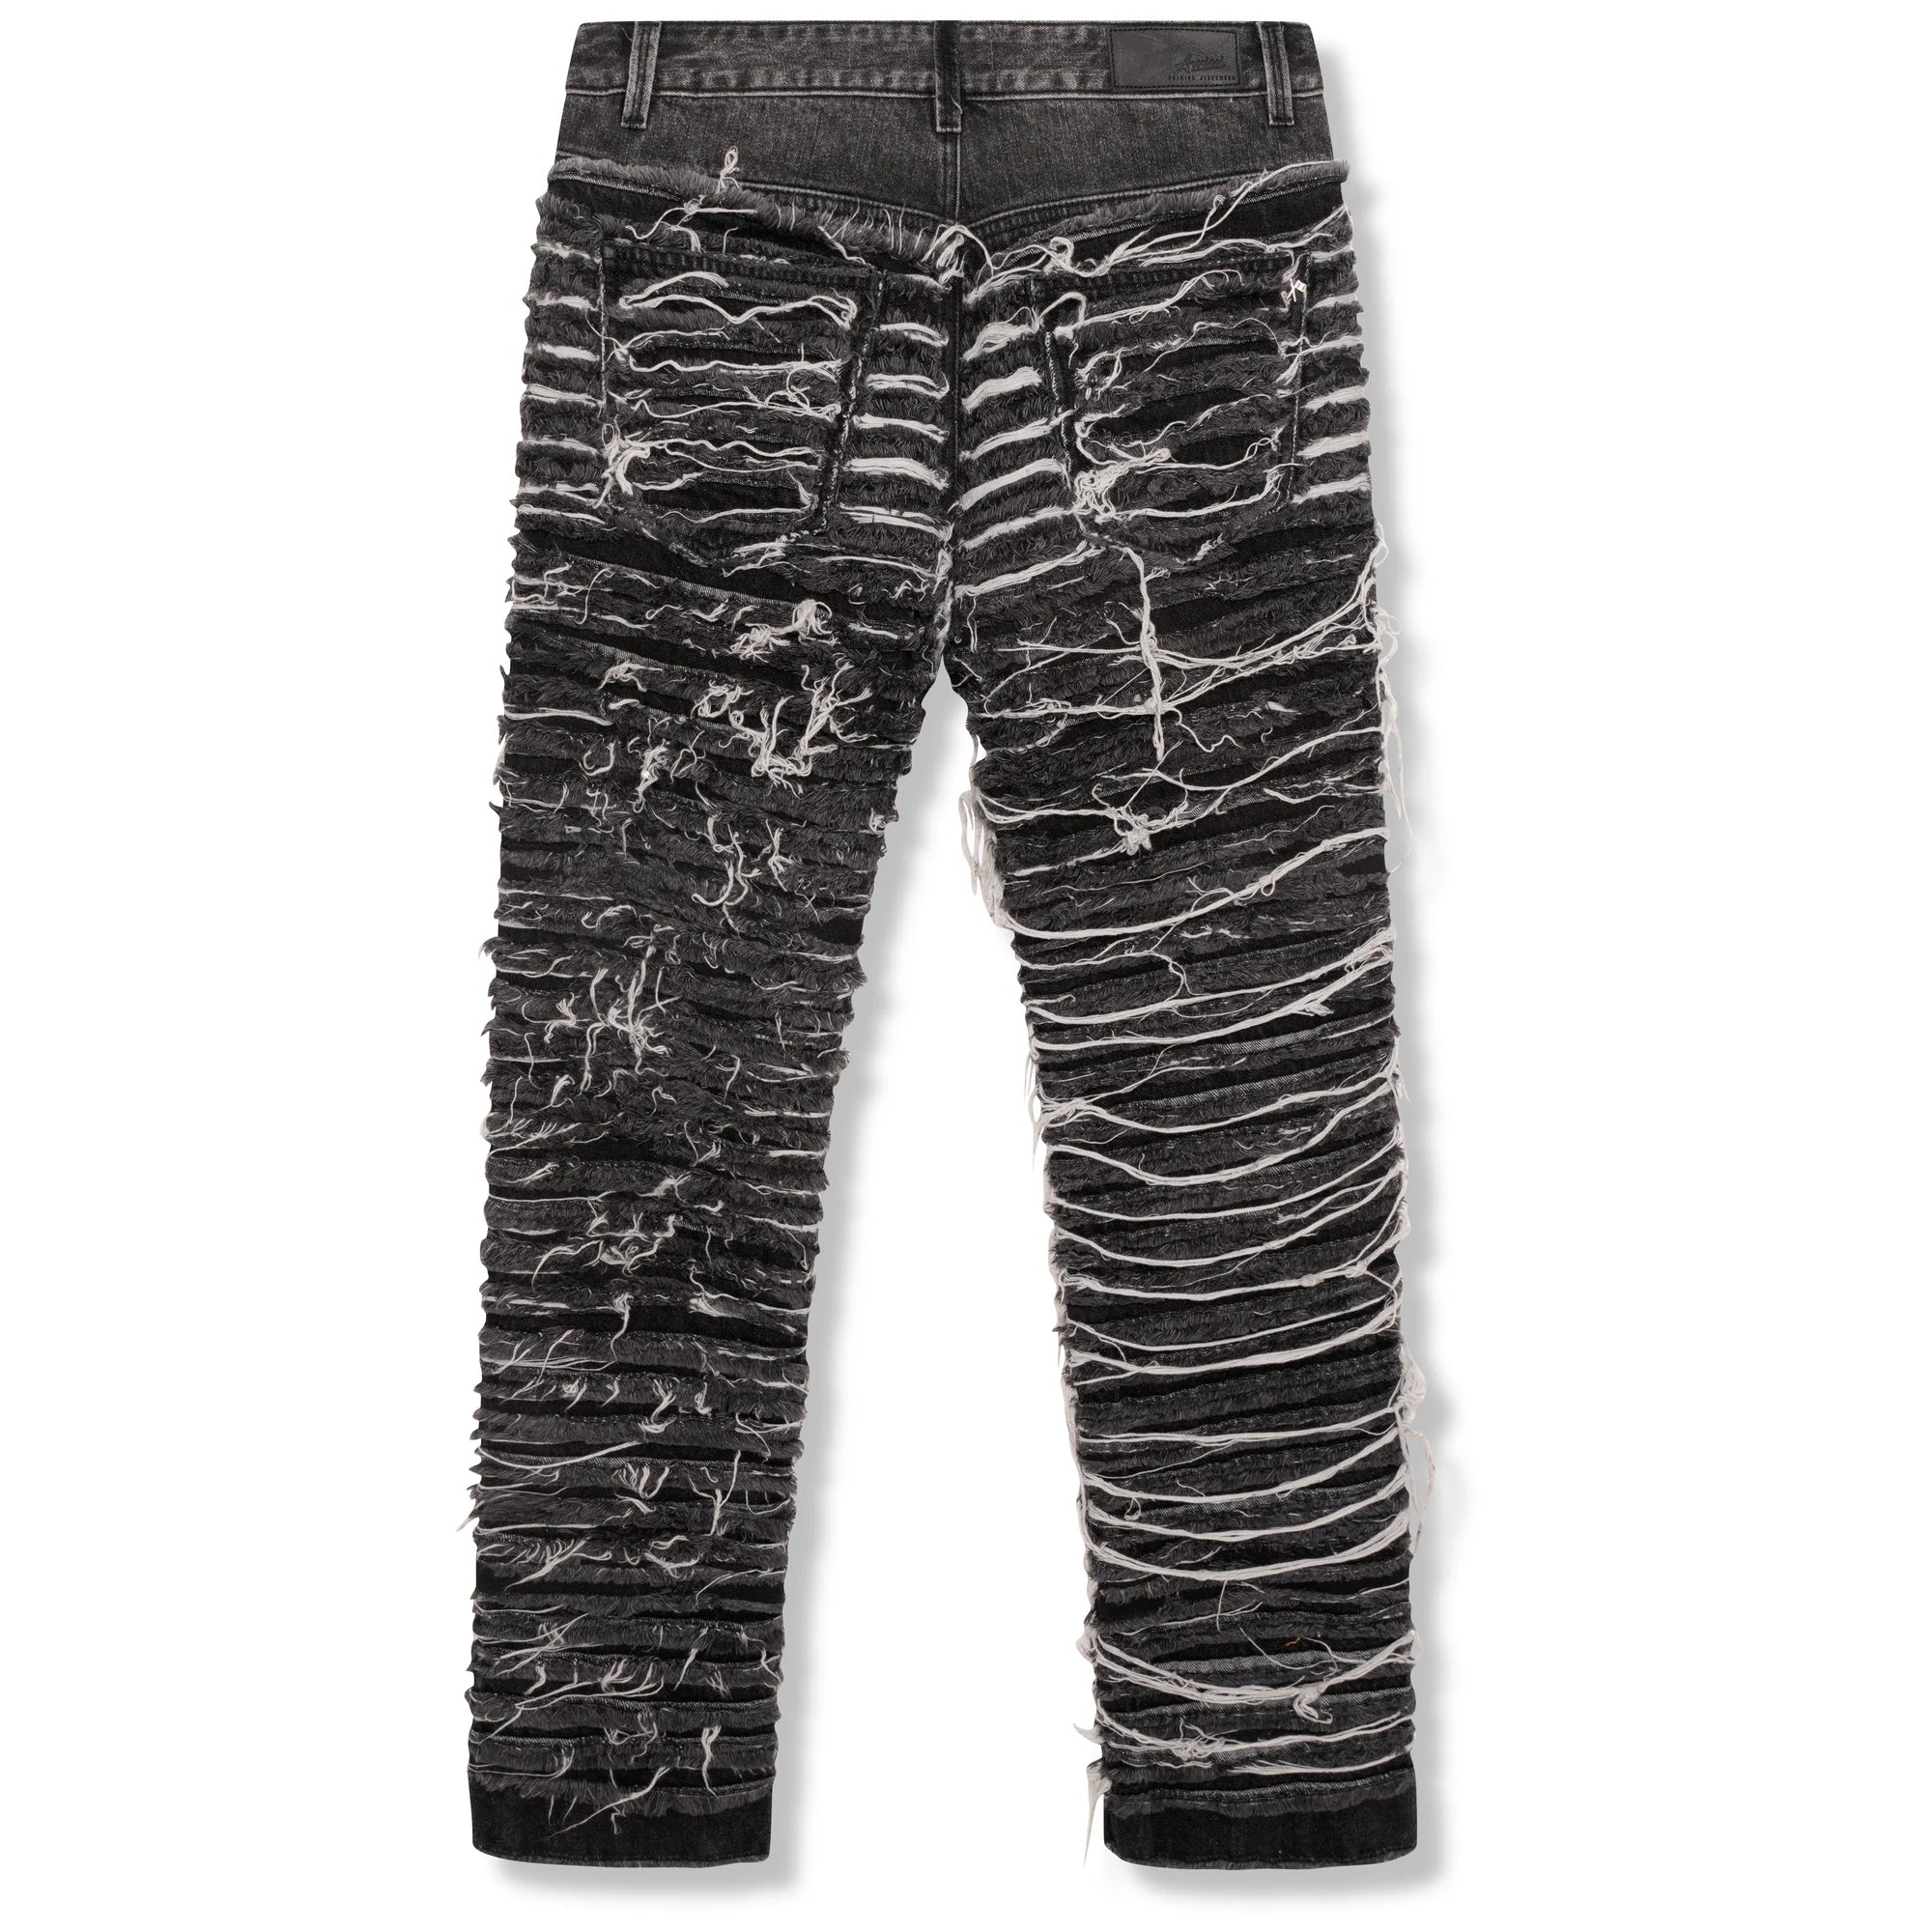 Amicci Sassari Shredded Denim Jeans Washed Black